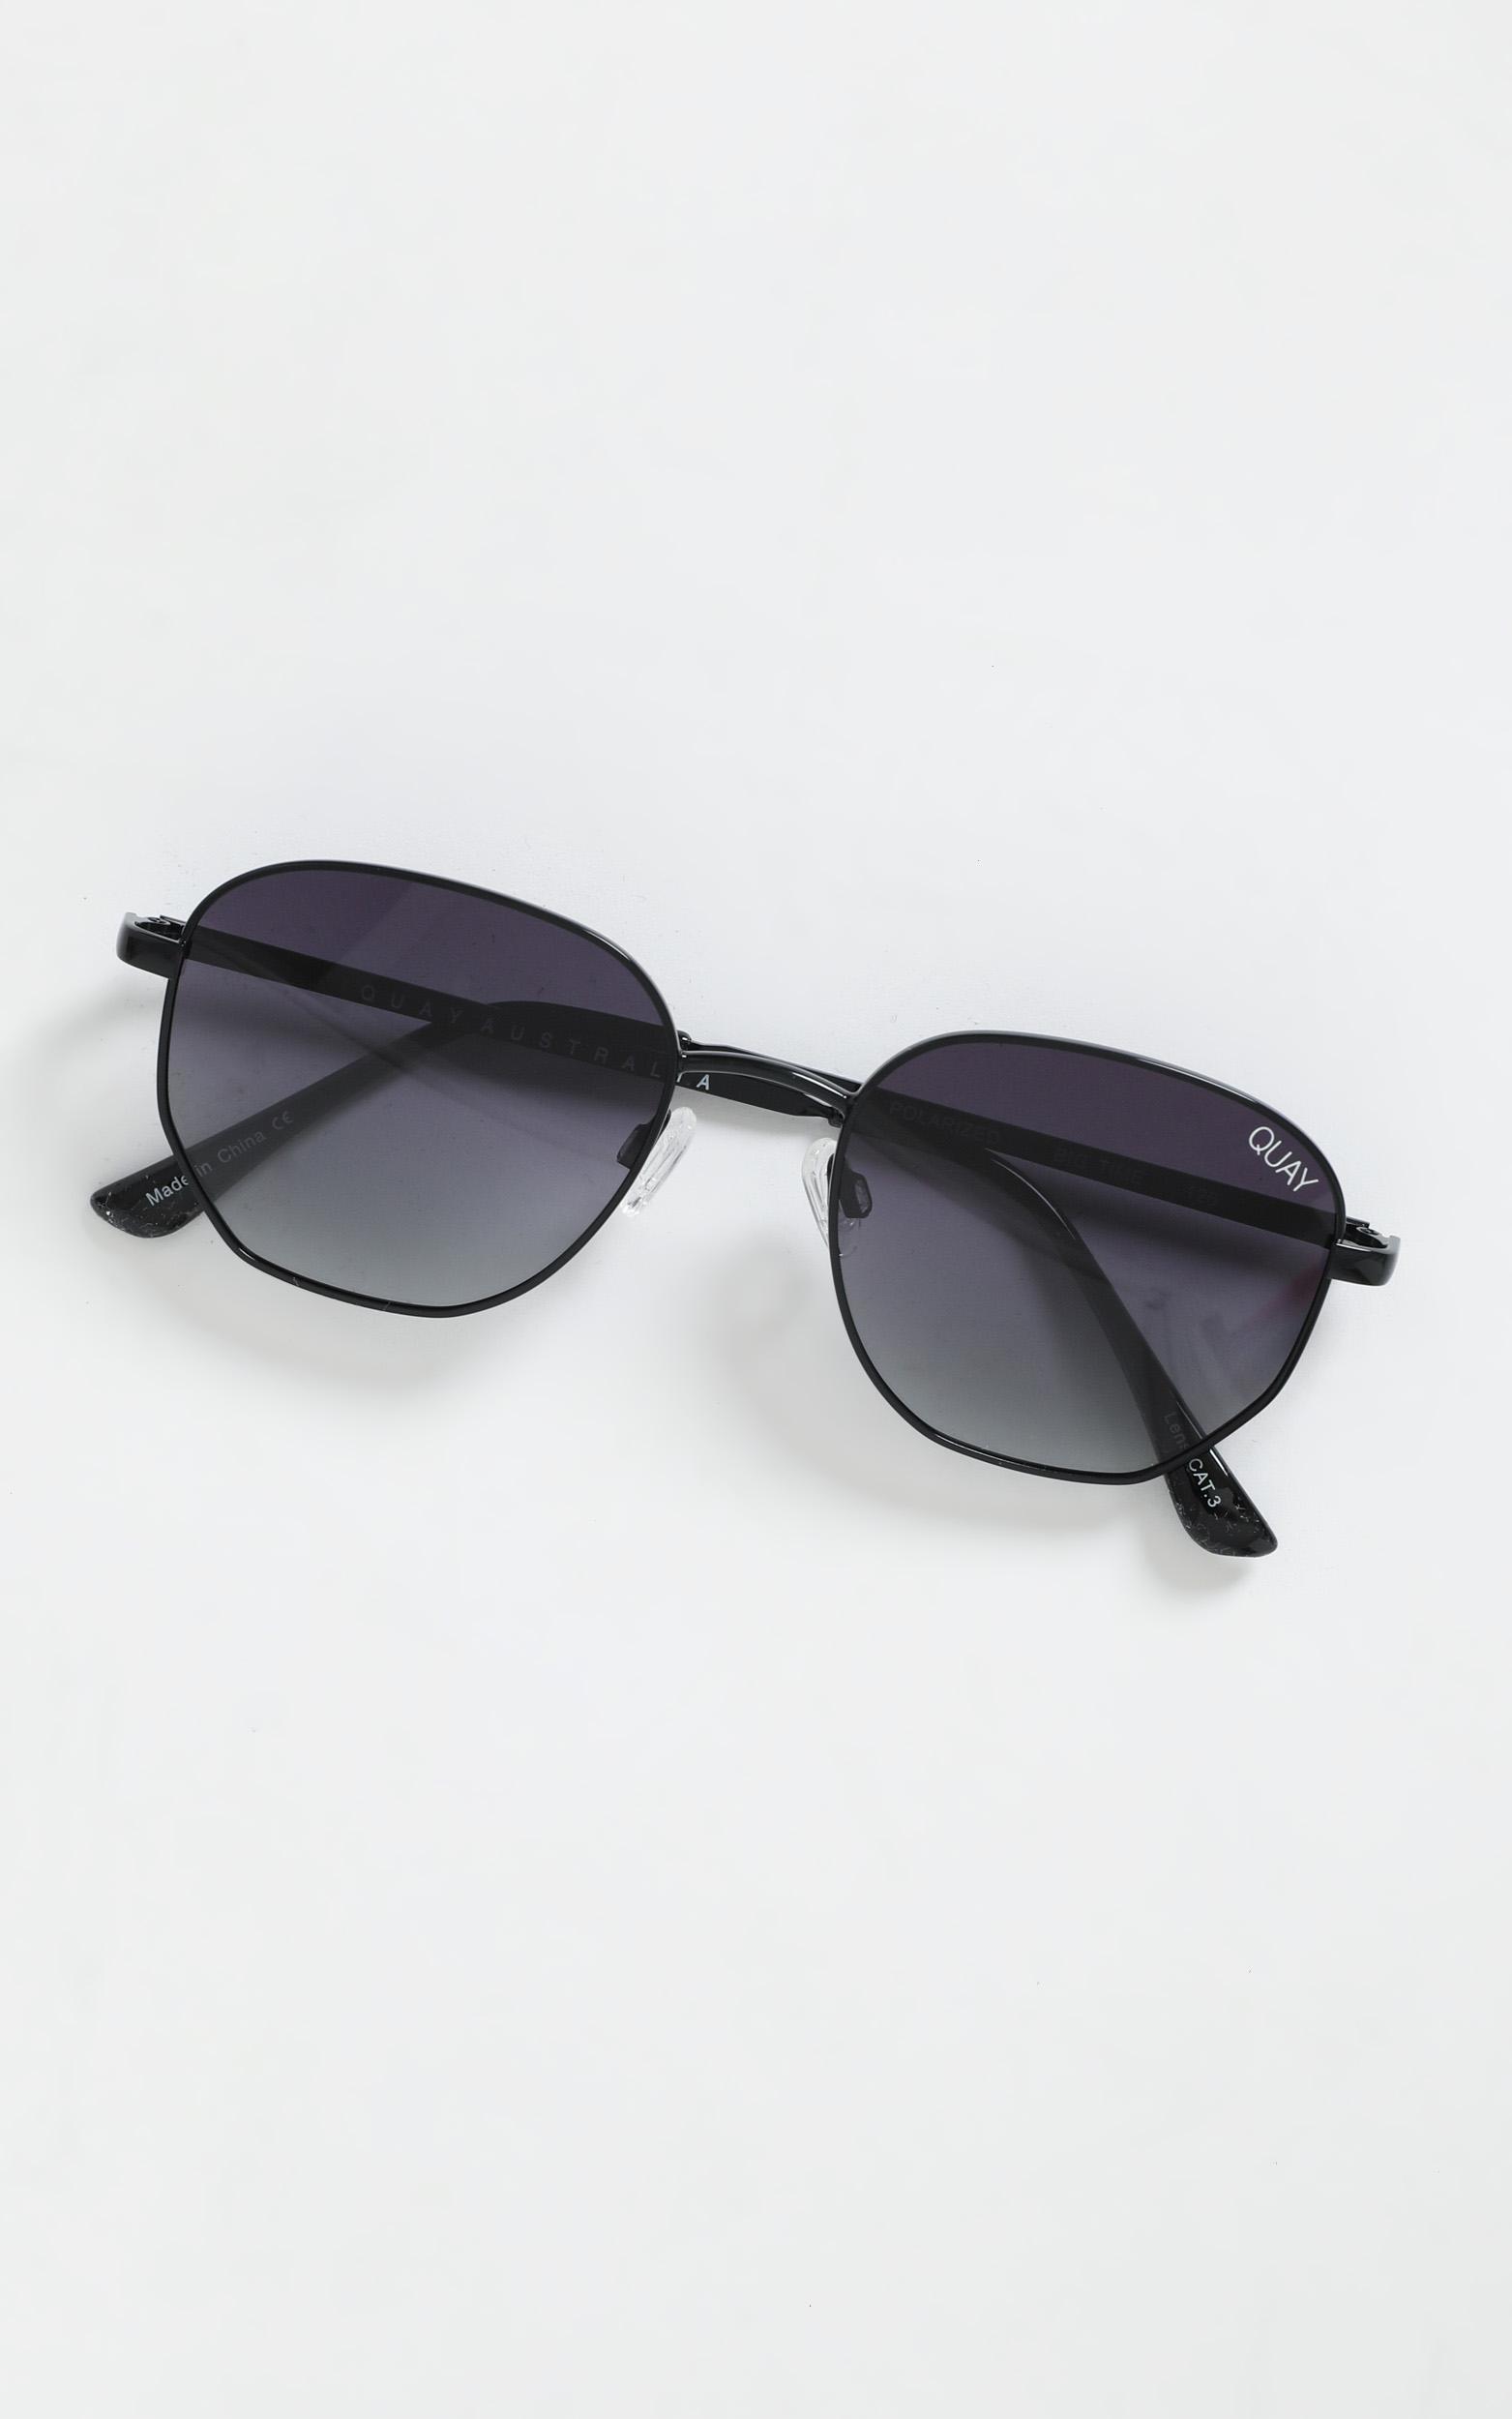 Quay - Big Time Sunglasses In Black and Smoke Lens | Showpo